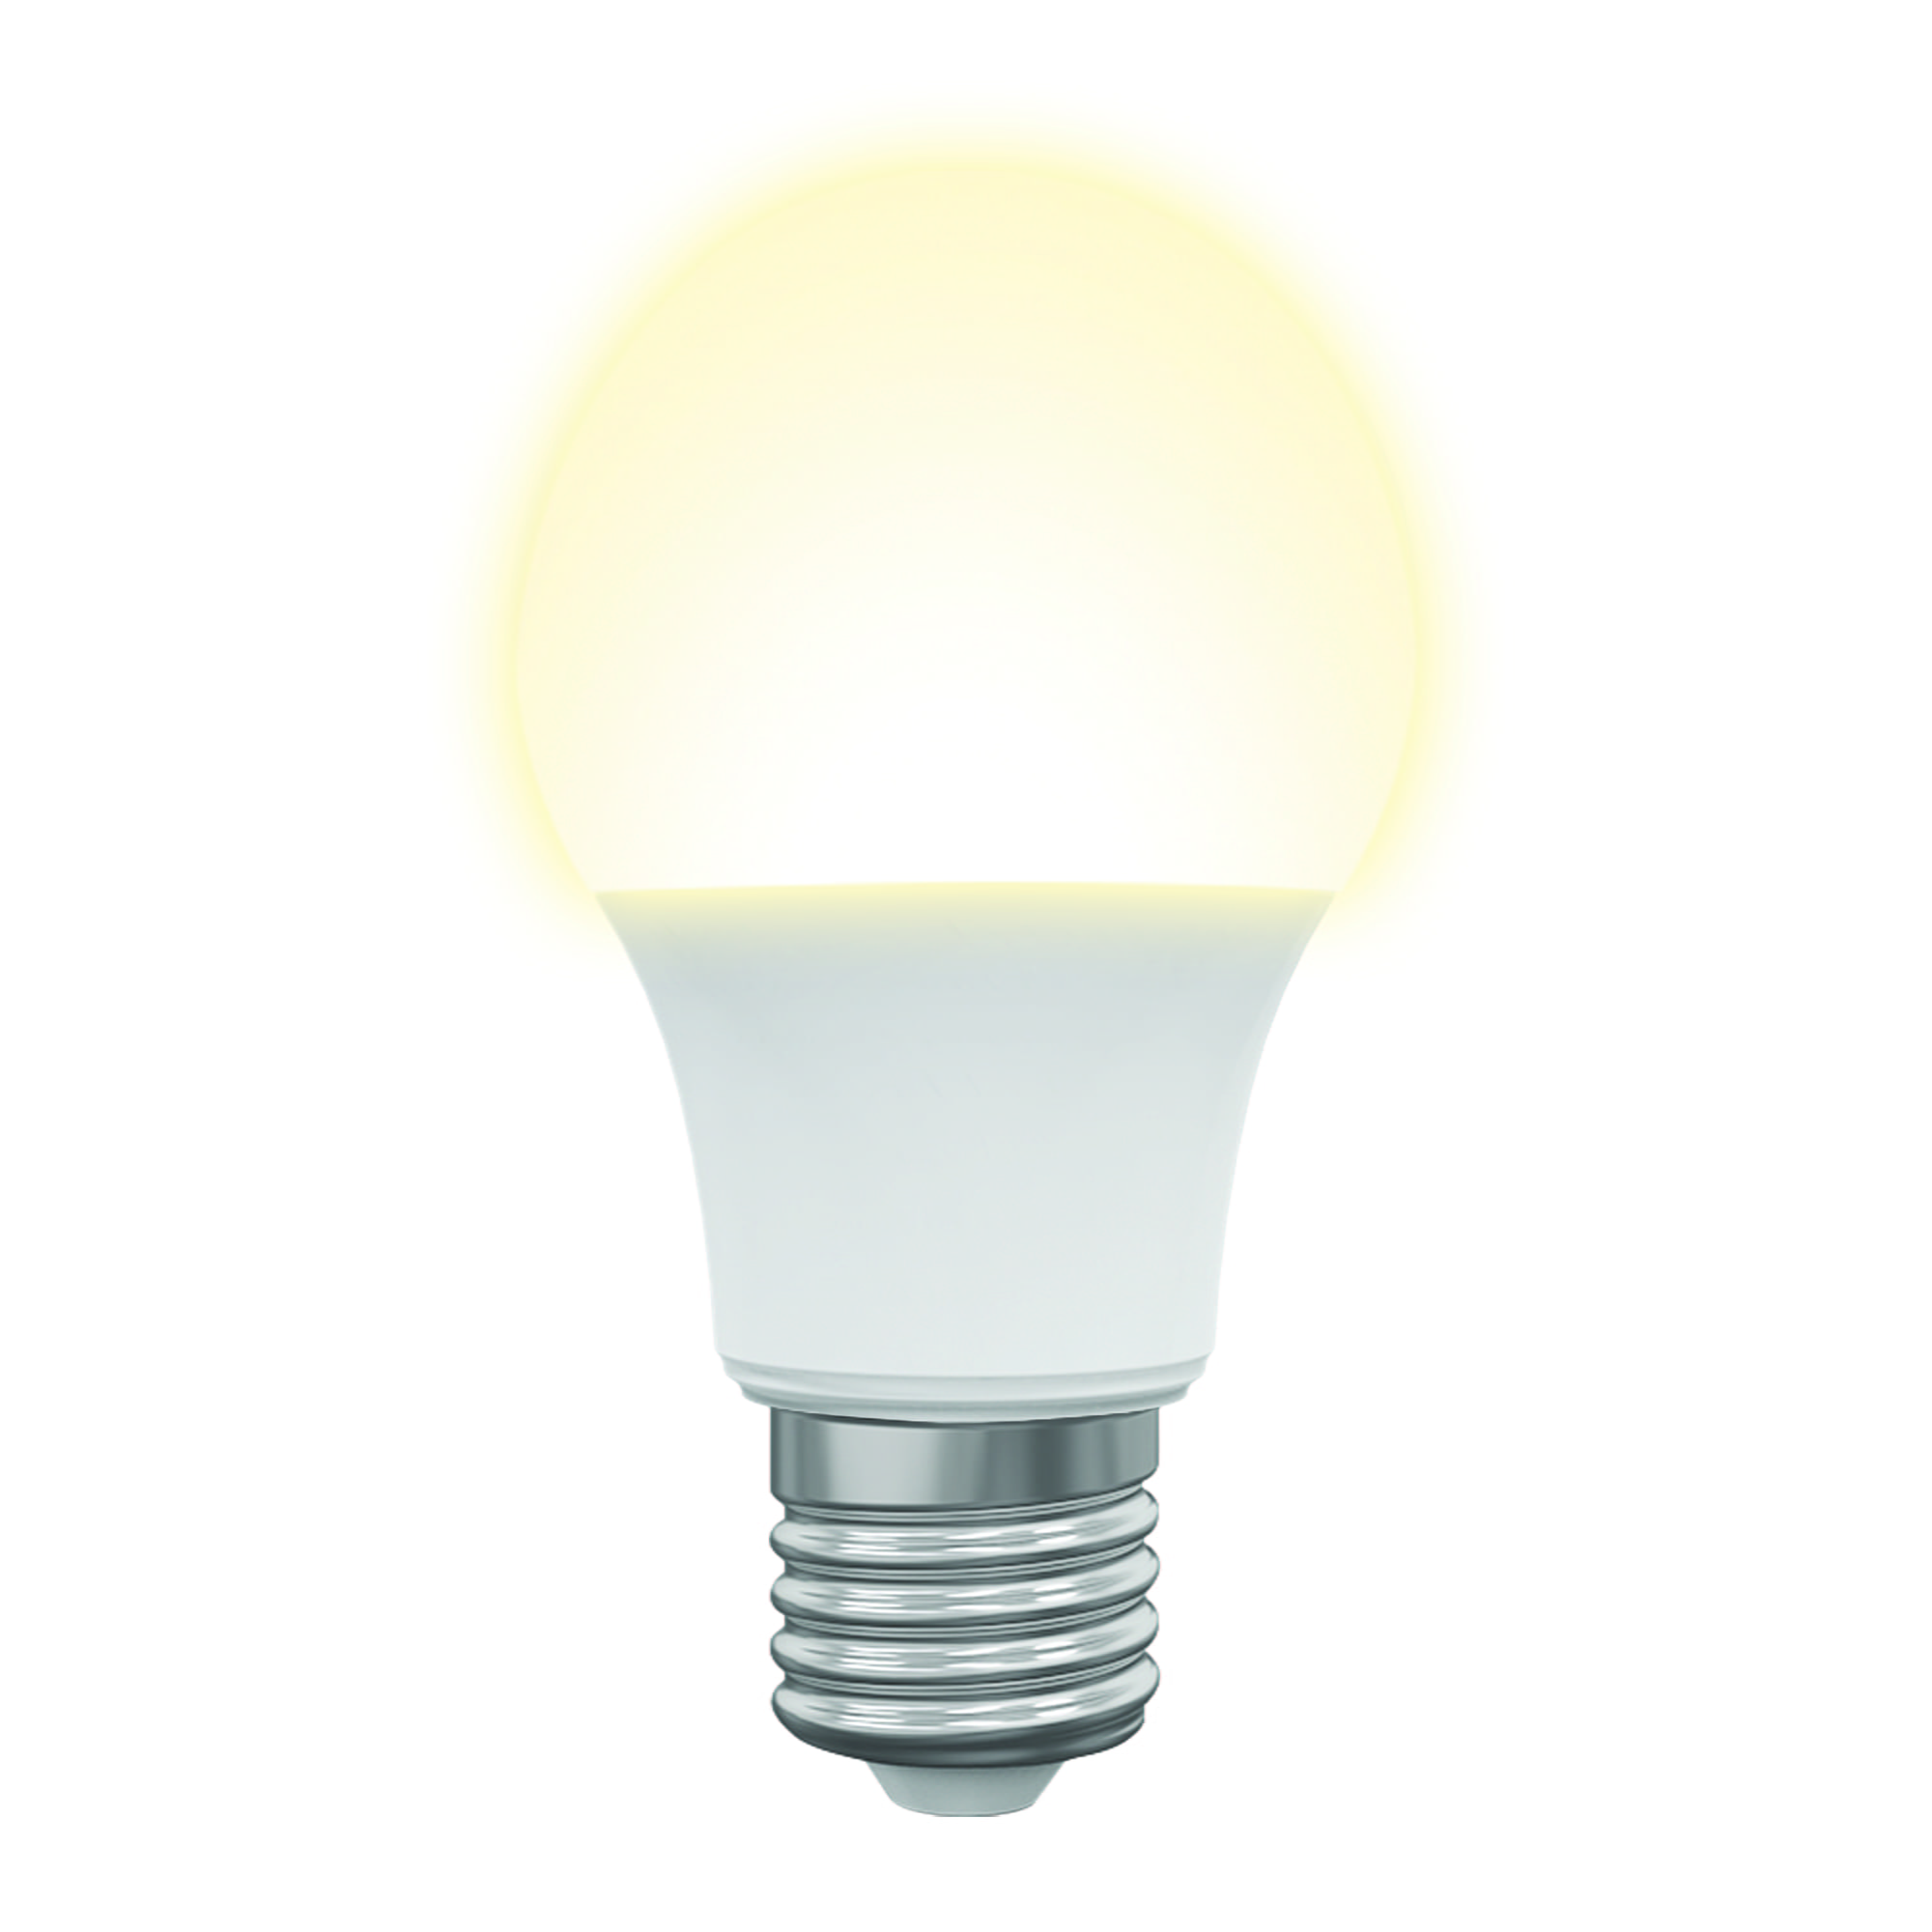 LED-A60-9W/3000K/E27/FR/NR Лампа светодиодная. Форма "A", матовая. Серия Norma. Теплый белый свет (3